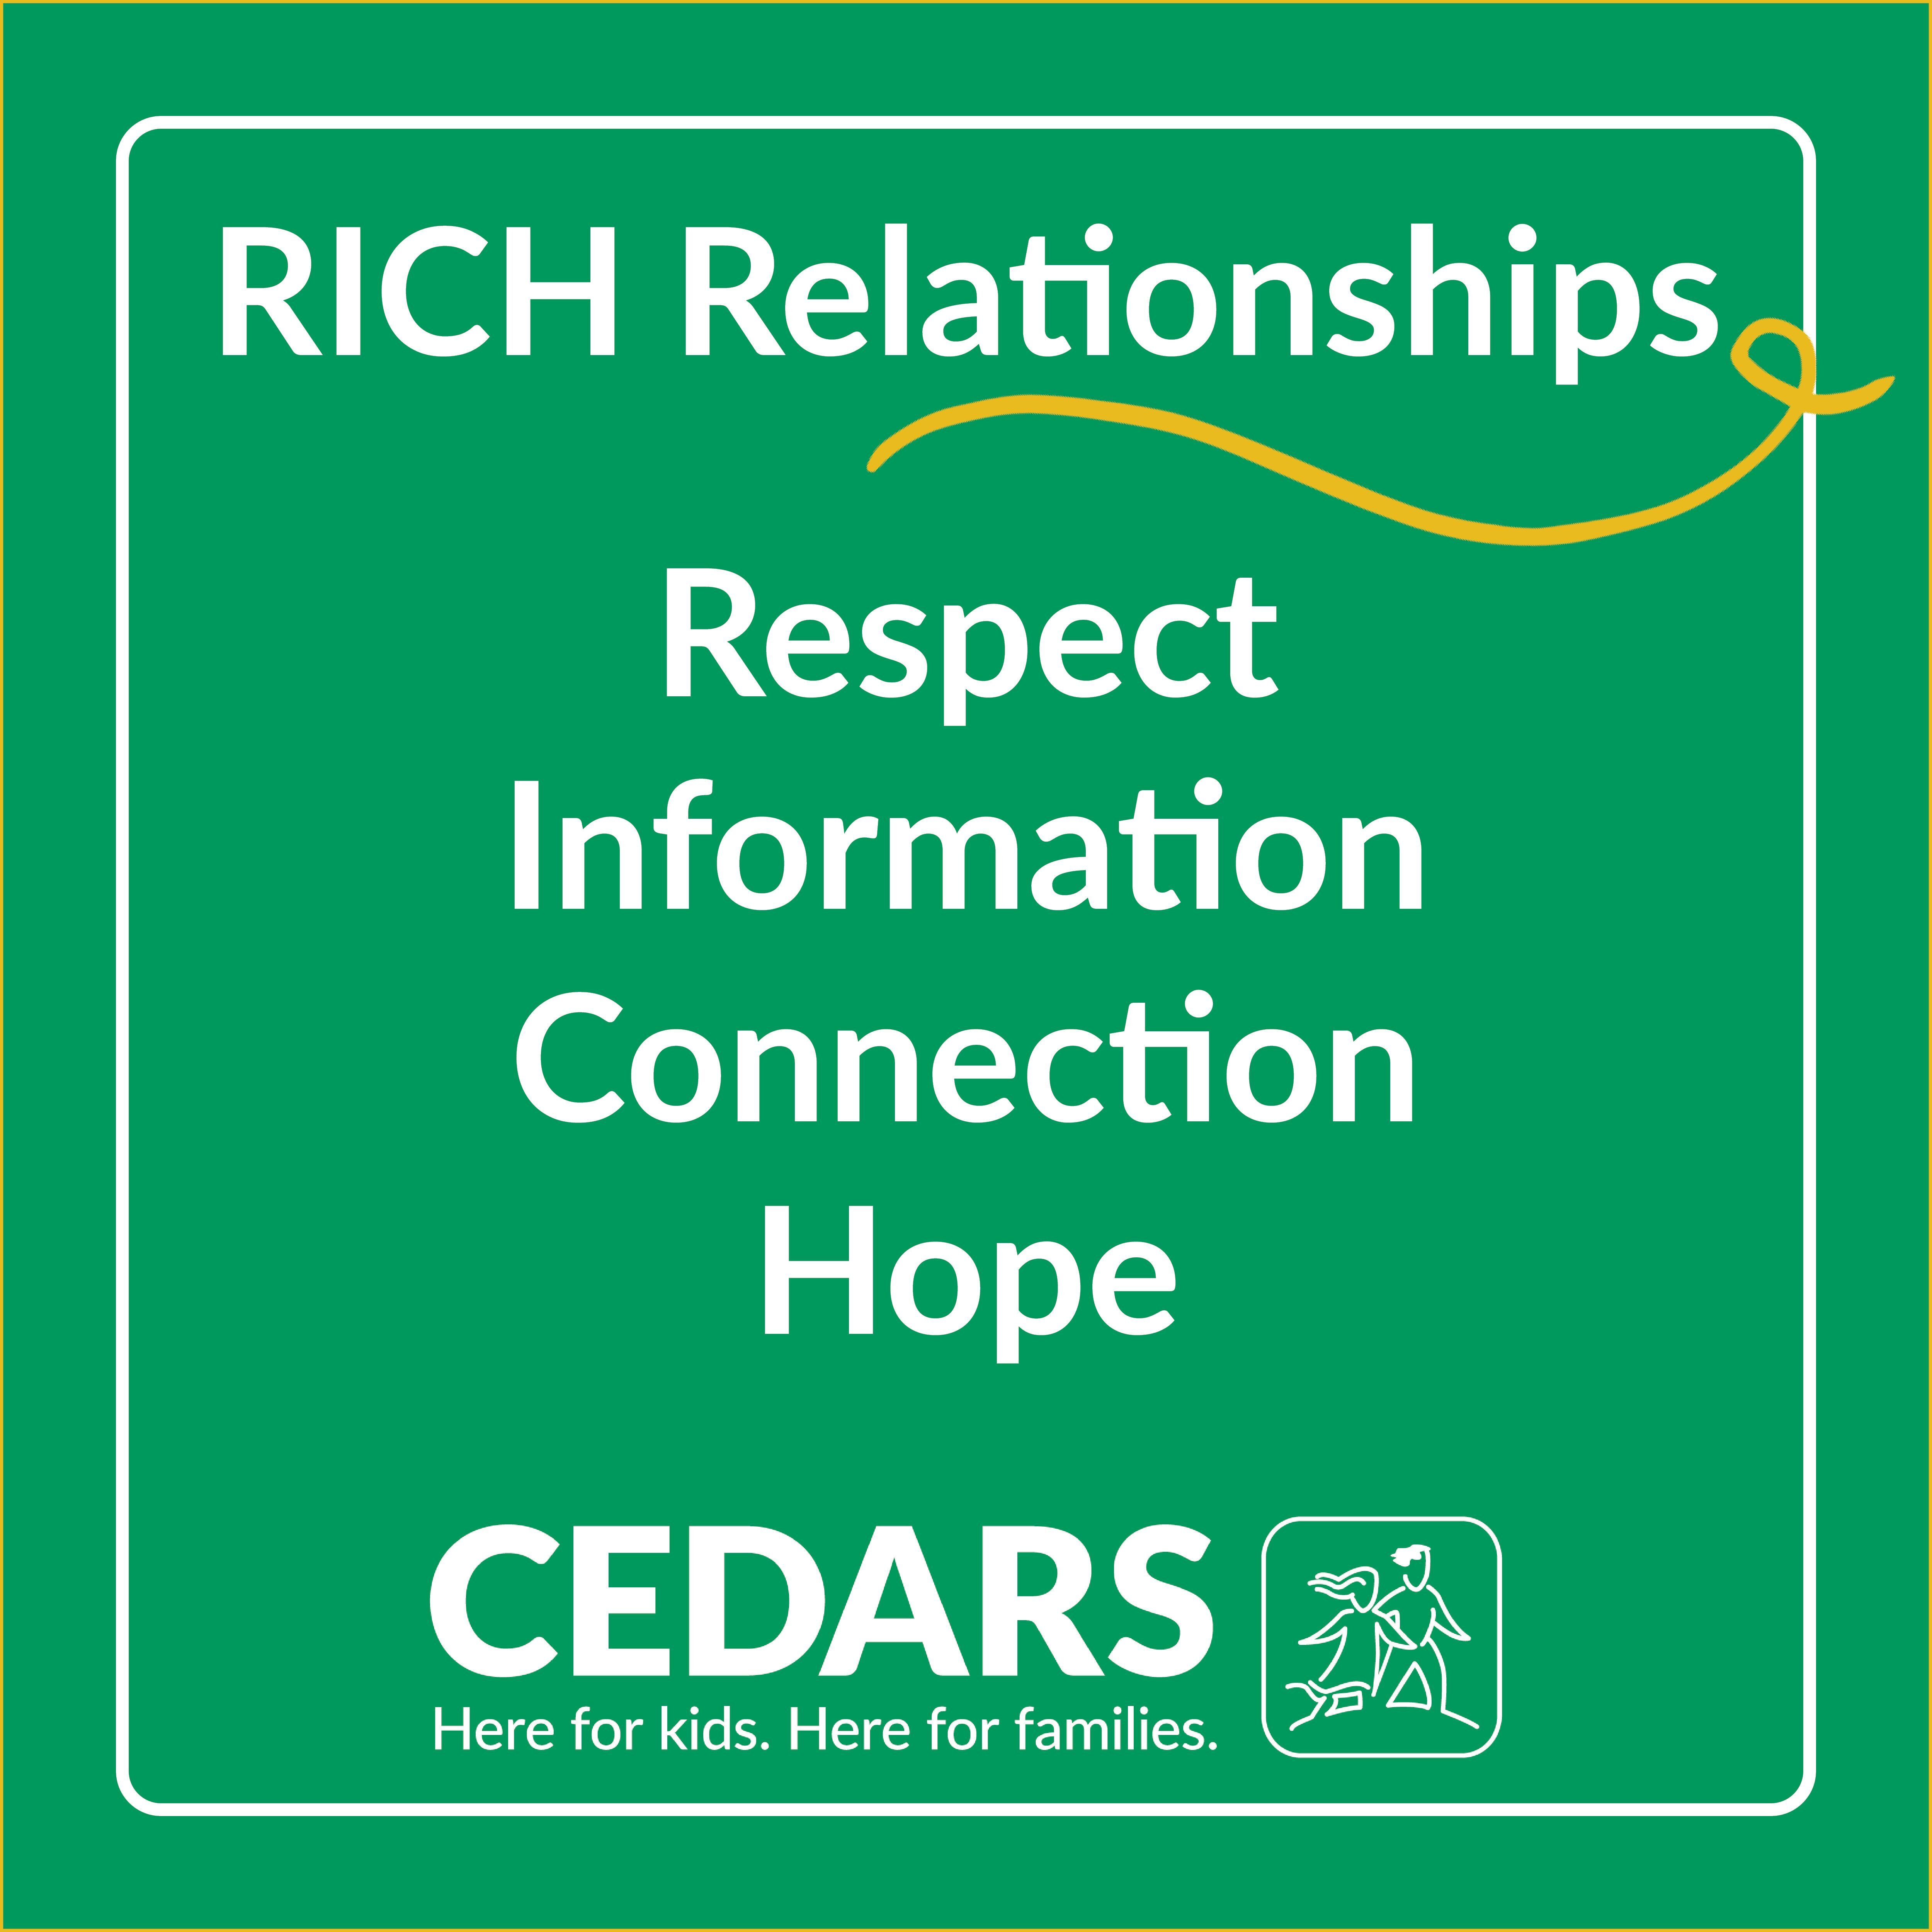 CEDARS Dedication to RICH Relationships